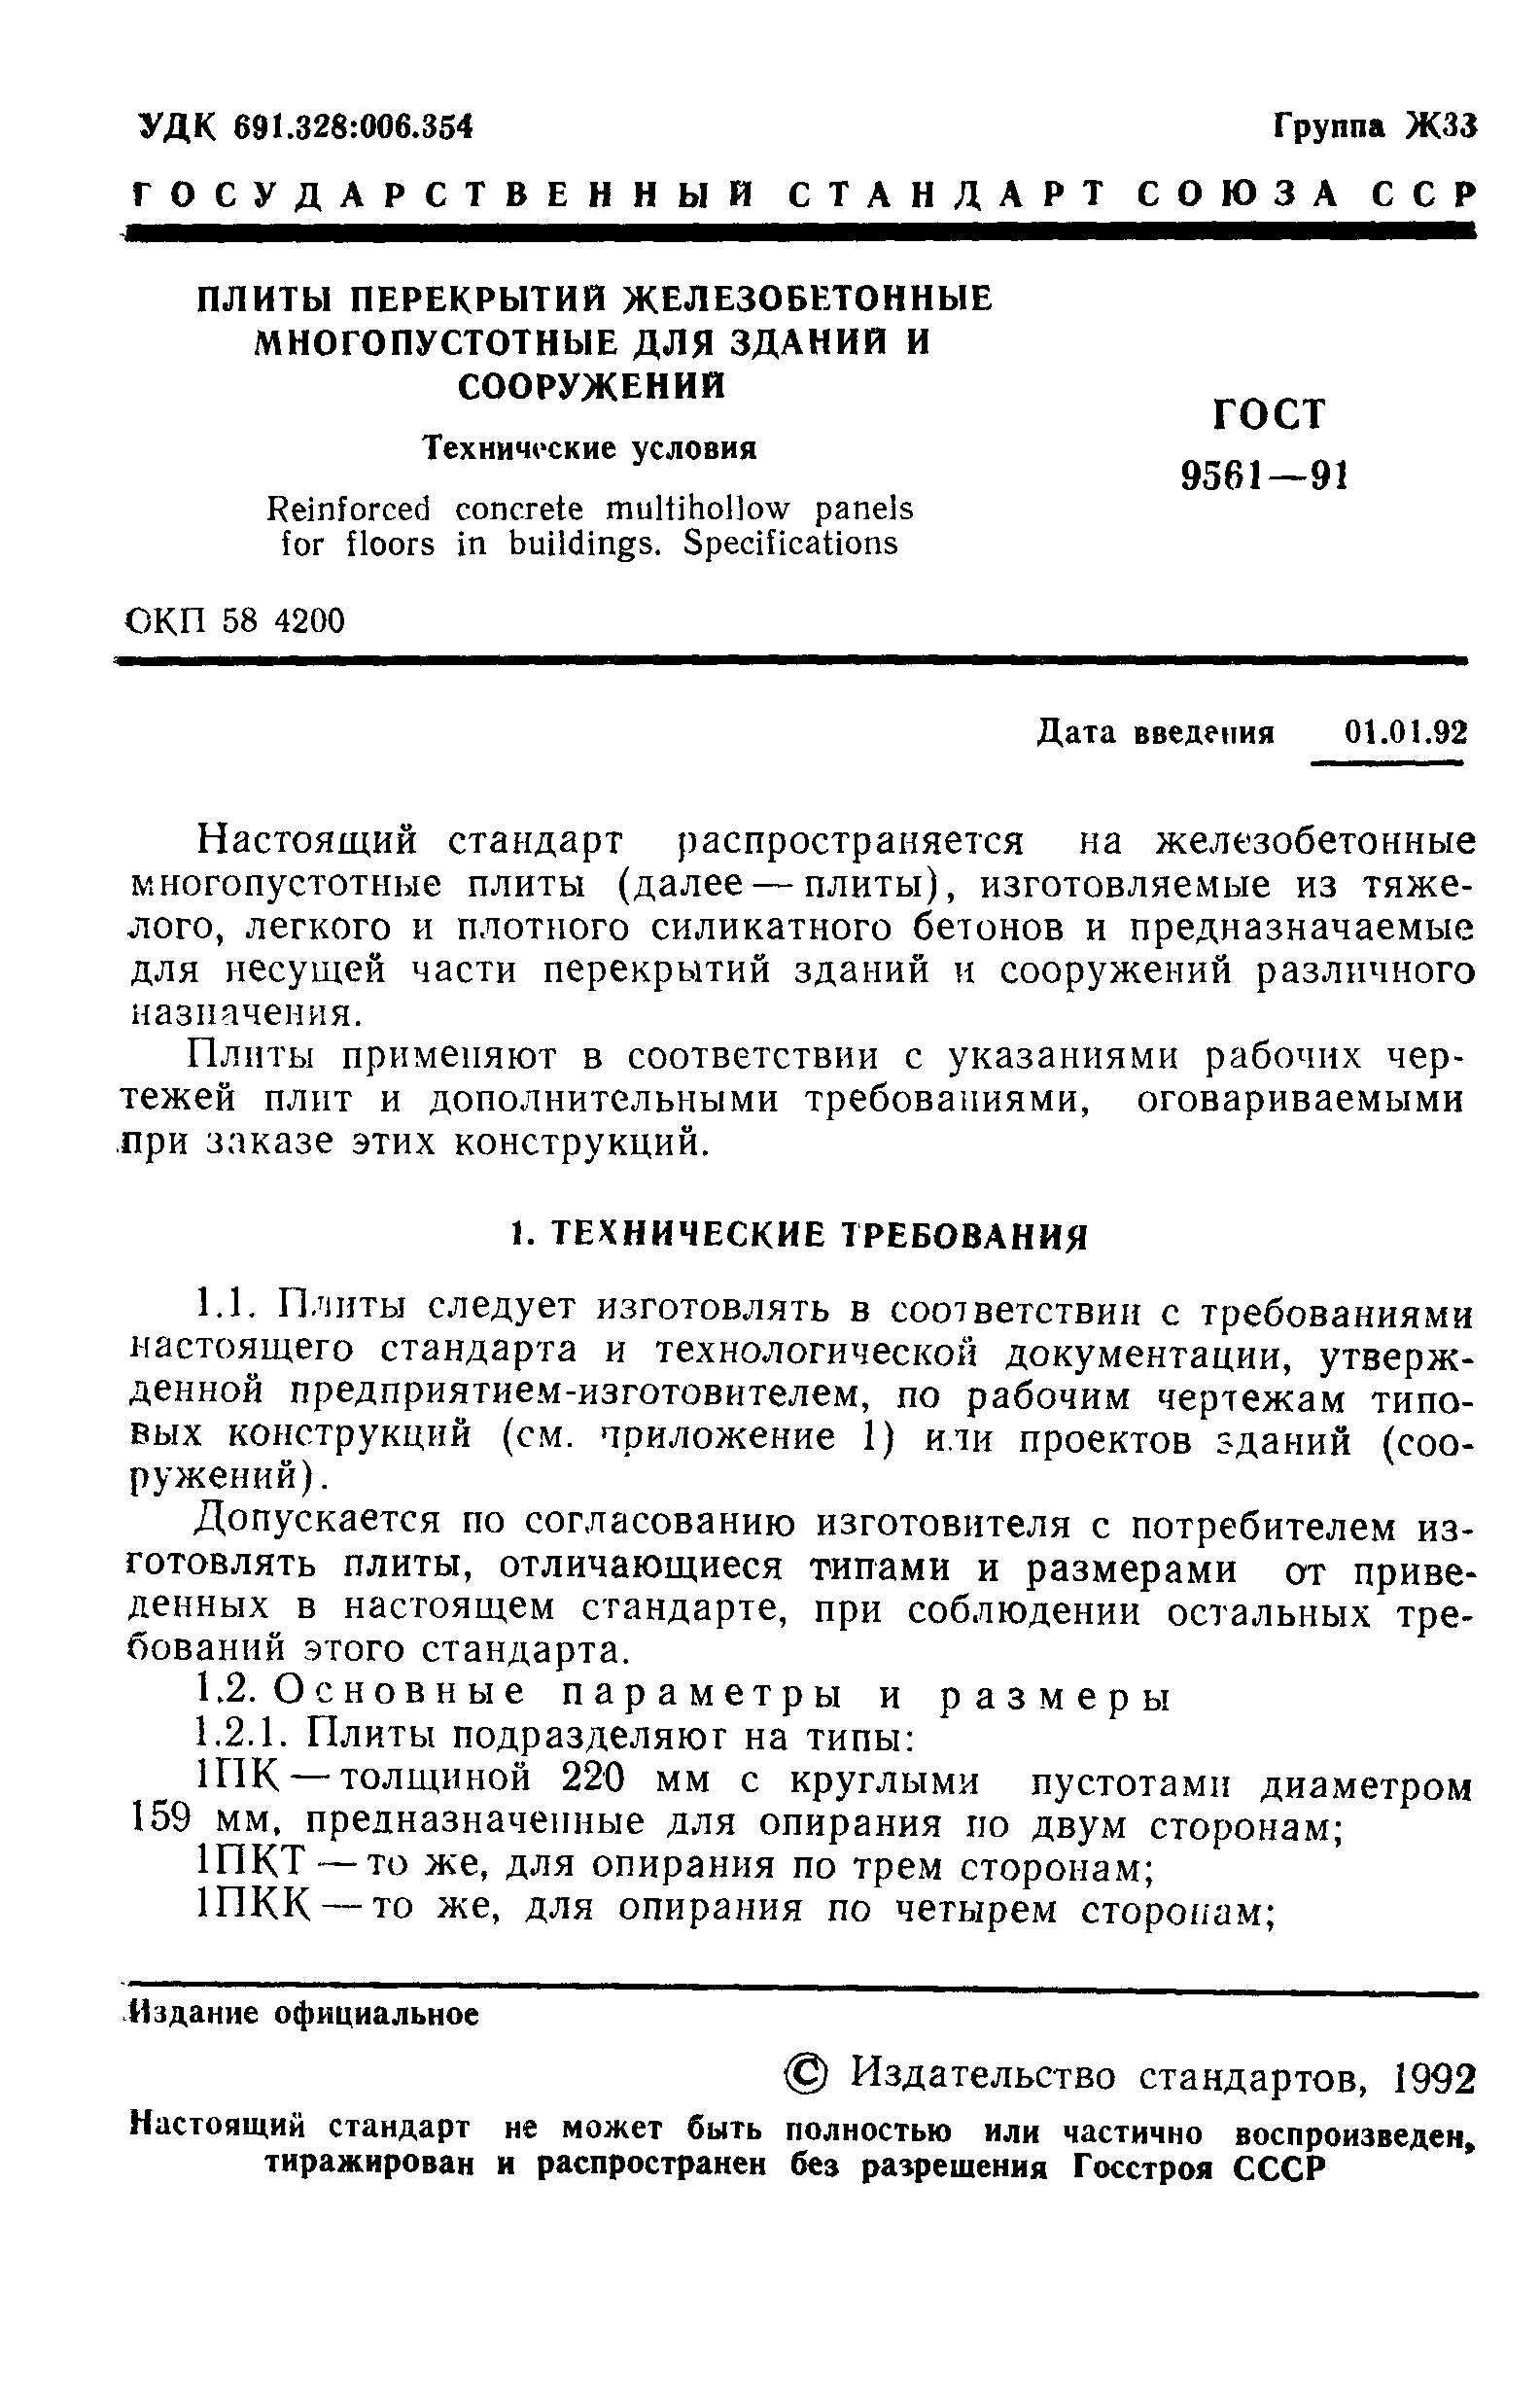 ГОСТ 9561-91